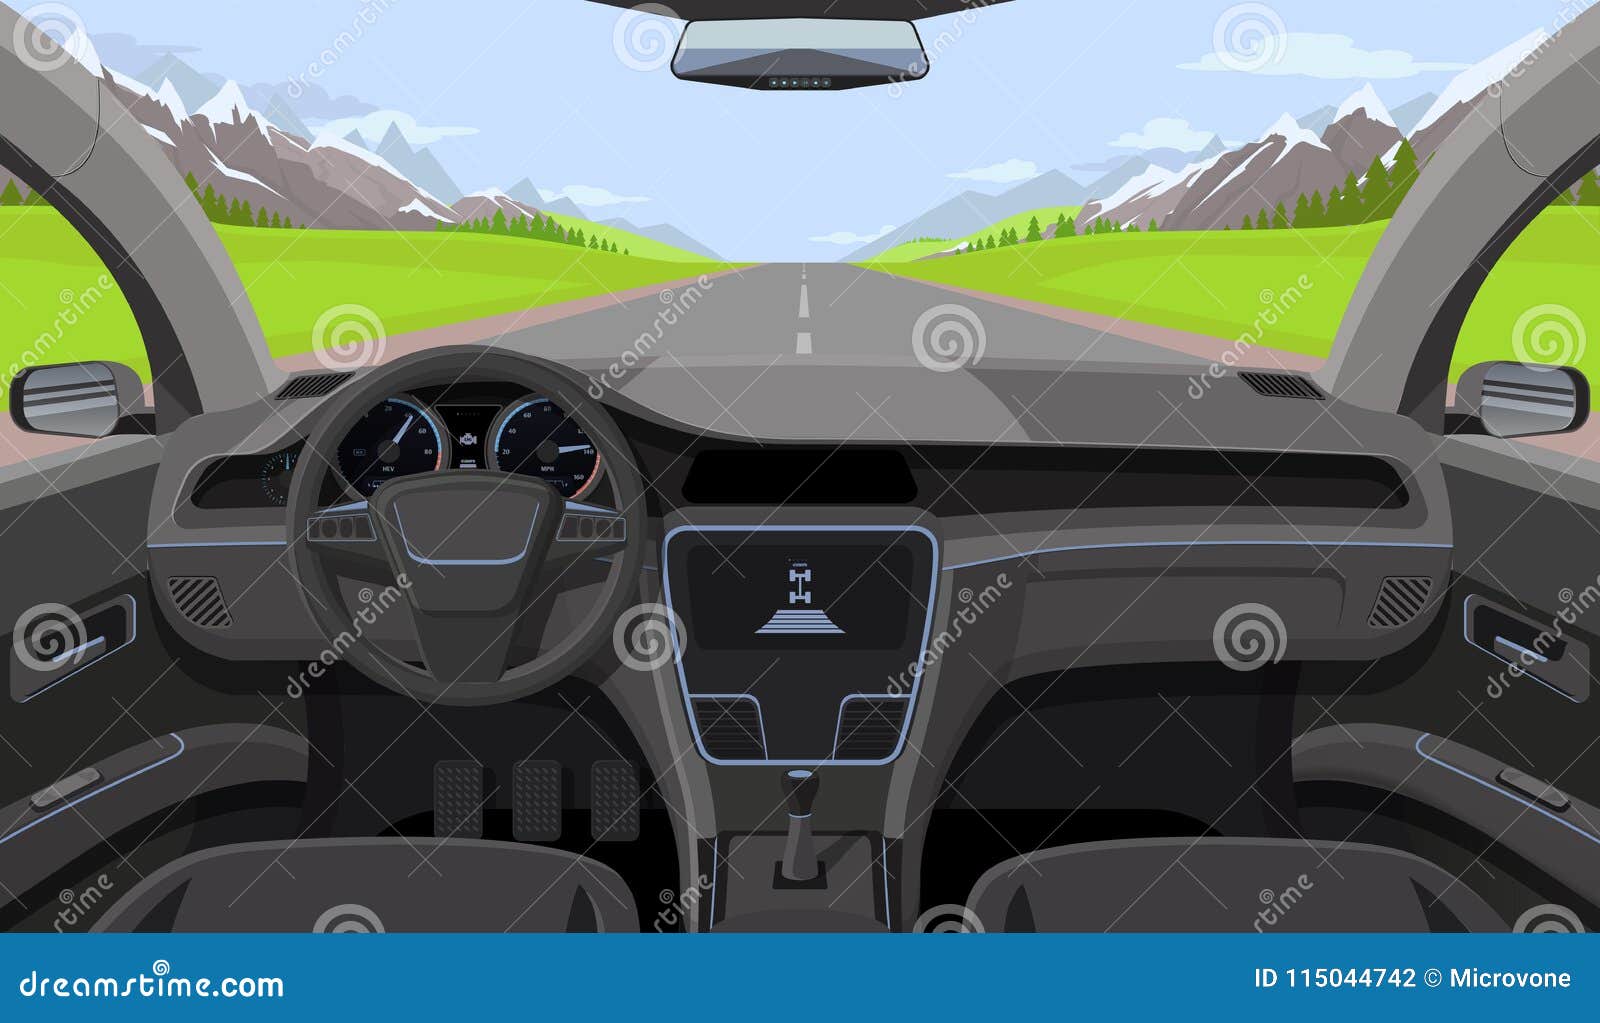 Car dashboard auto salon interior Royalty Free Vector Image